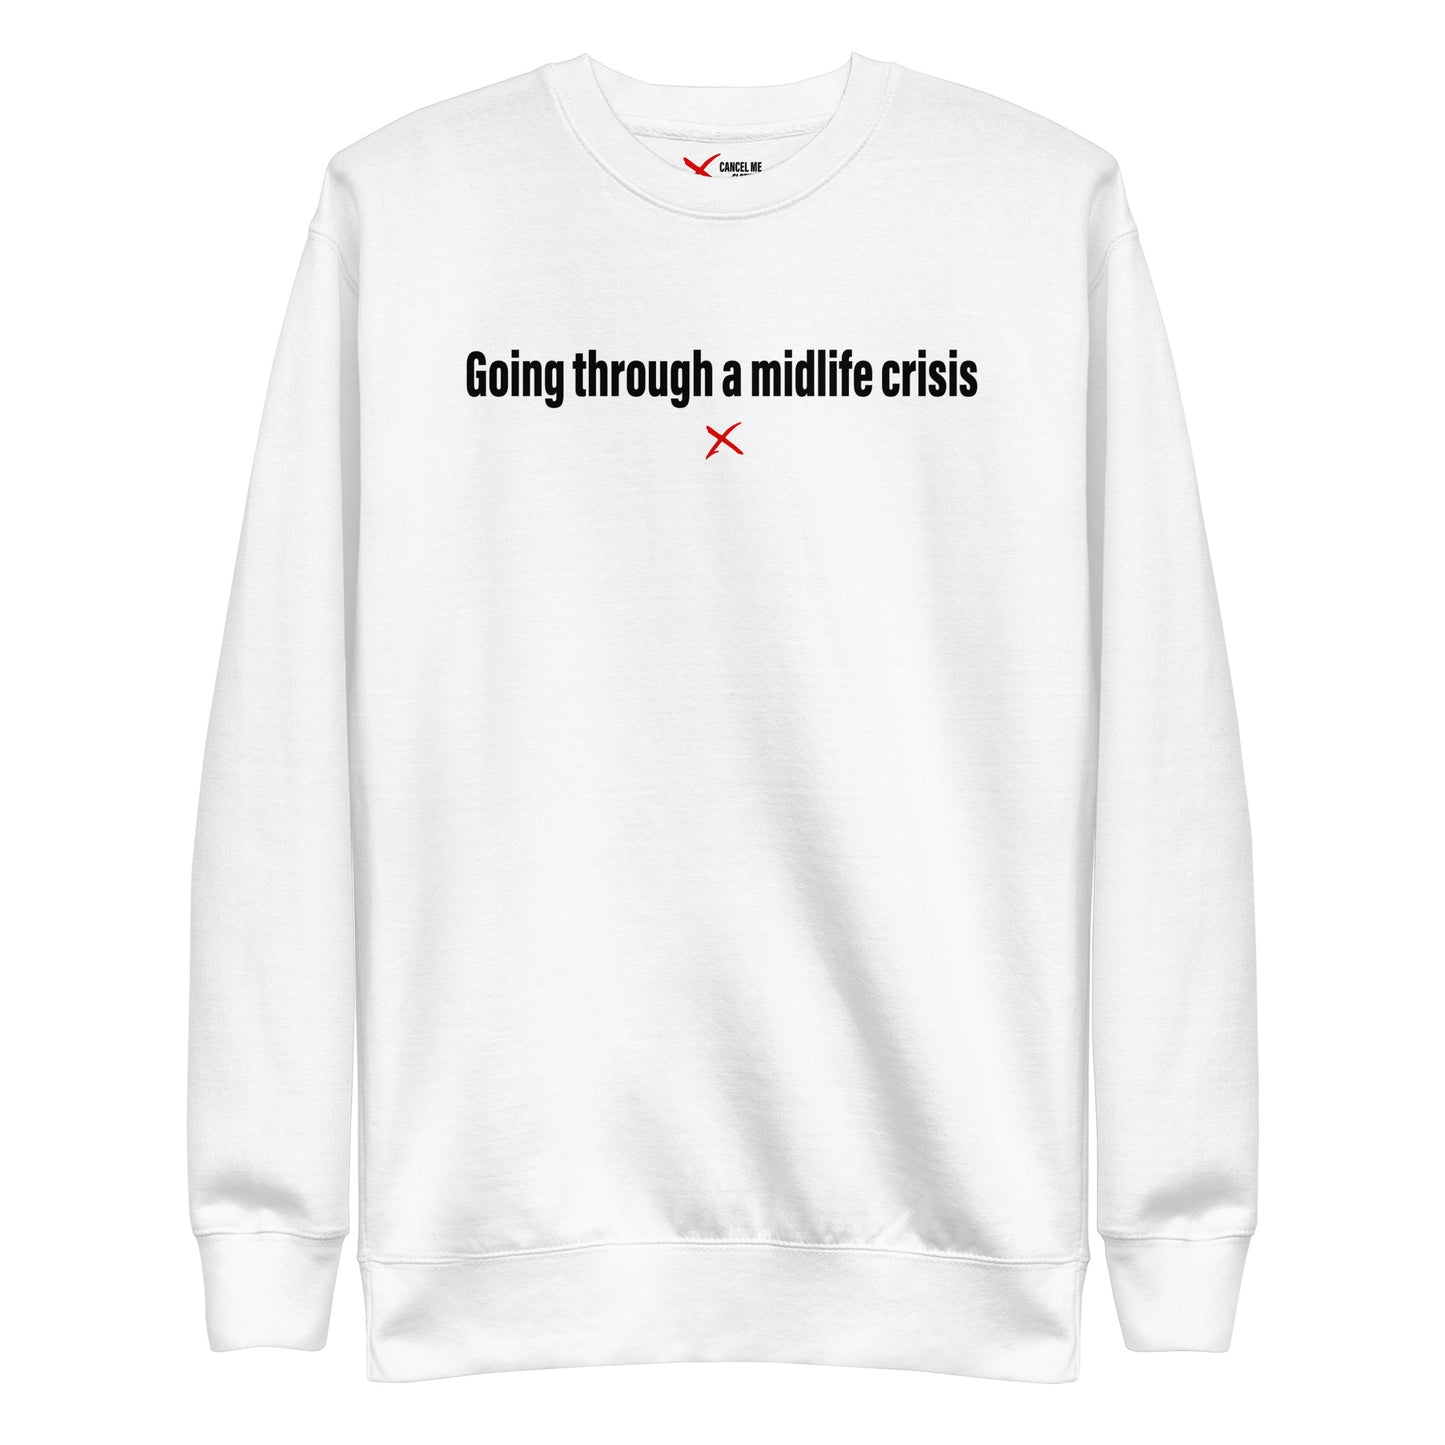 Going through a midlife crisis - Sweatshirt